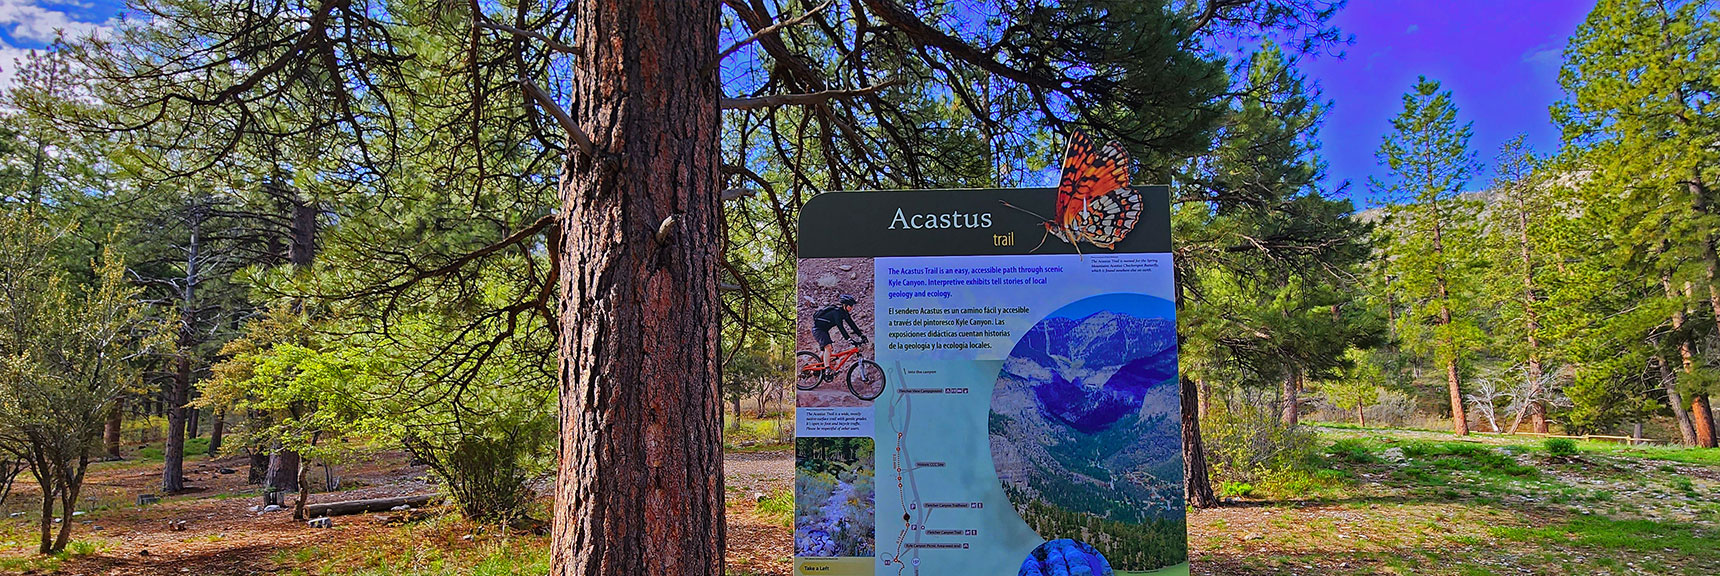 Introductory Interpretive Display at The Fletcher Canyon Trailhead Area | Acastus Trail | Mt Charleston Wilderness | Spring Mountains, Nevada